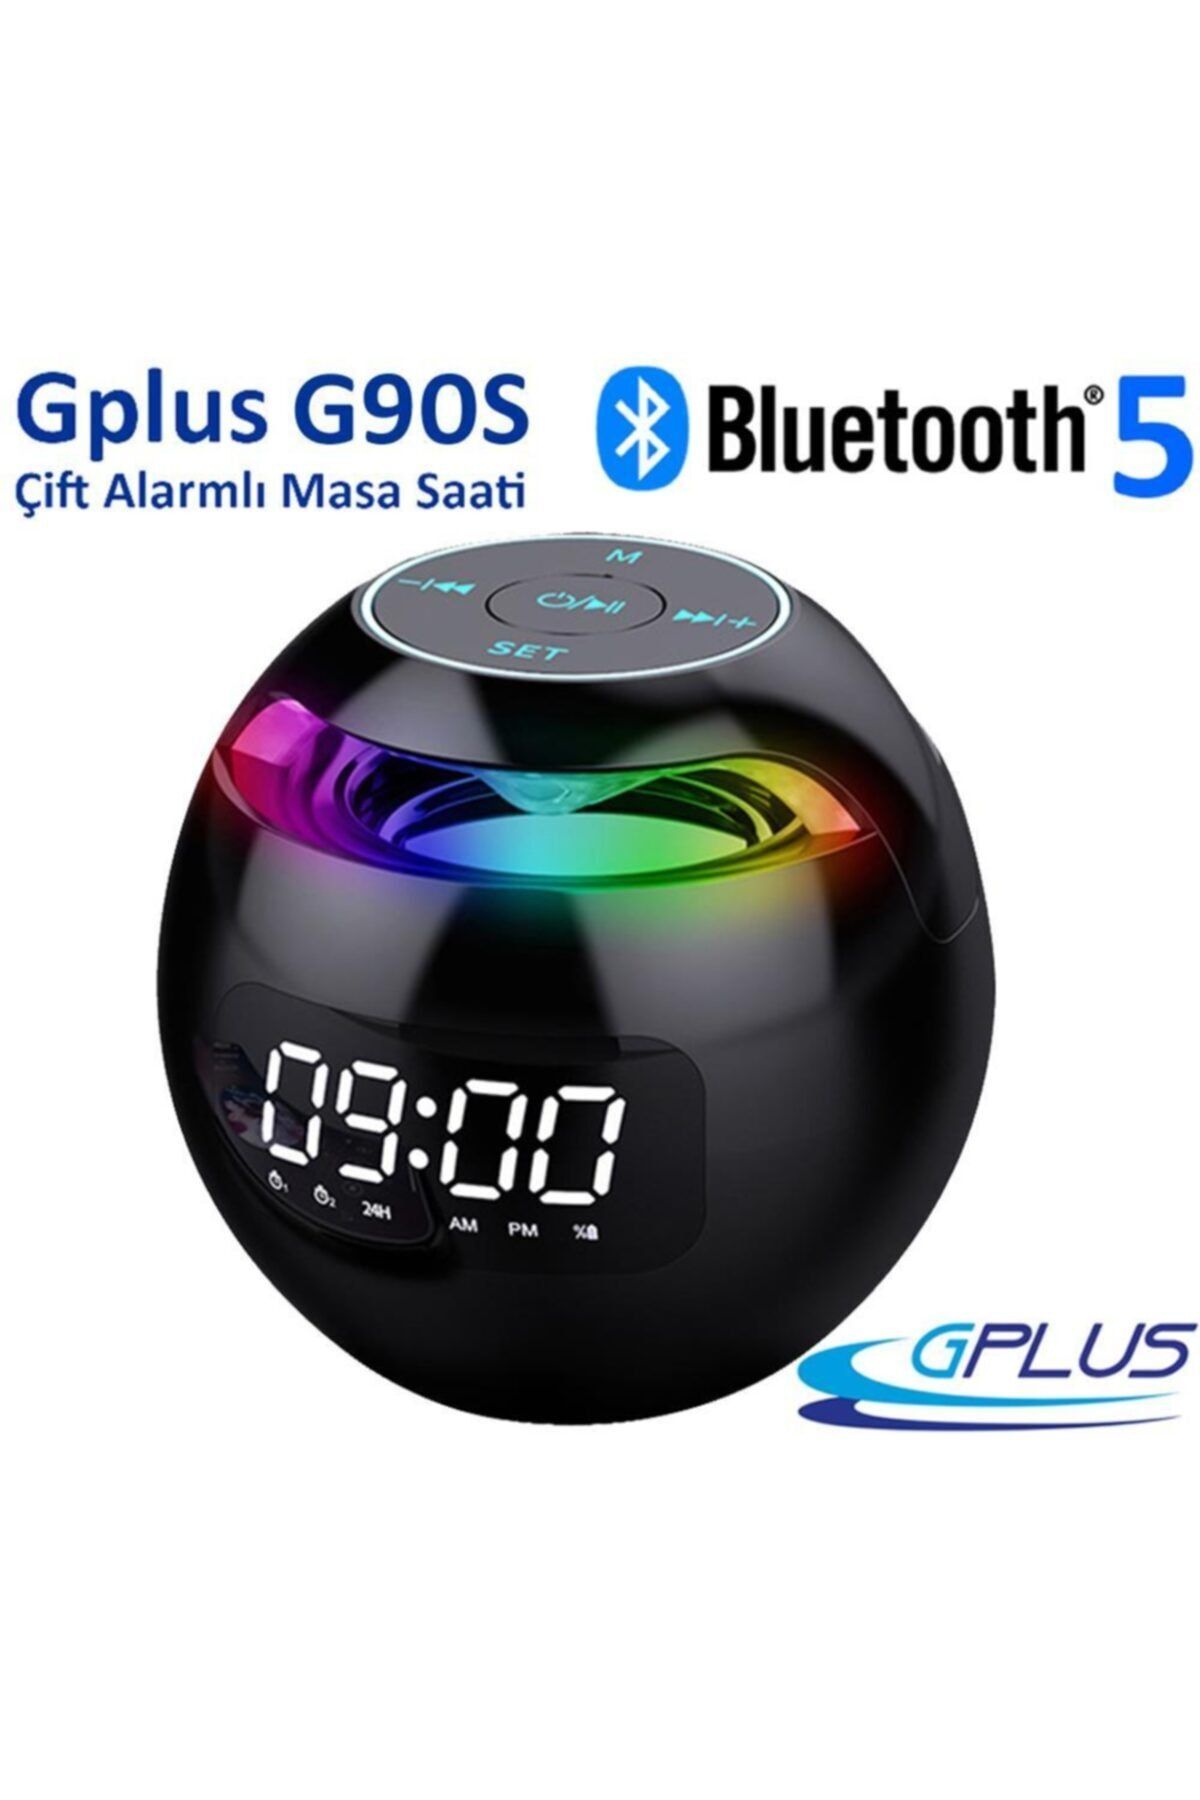 Gplus G90s Bluetooth 5.0 Çift Alarmlı Radyolu Dijital Masa Saati